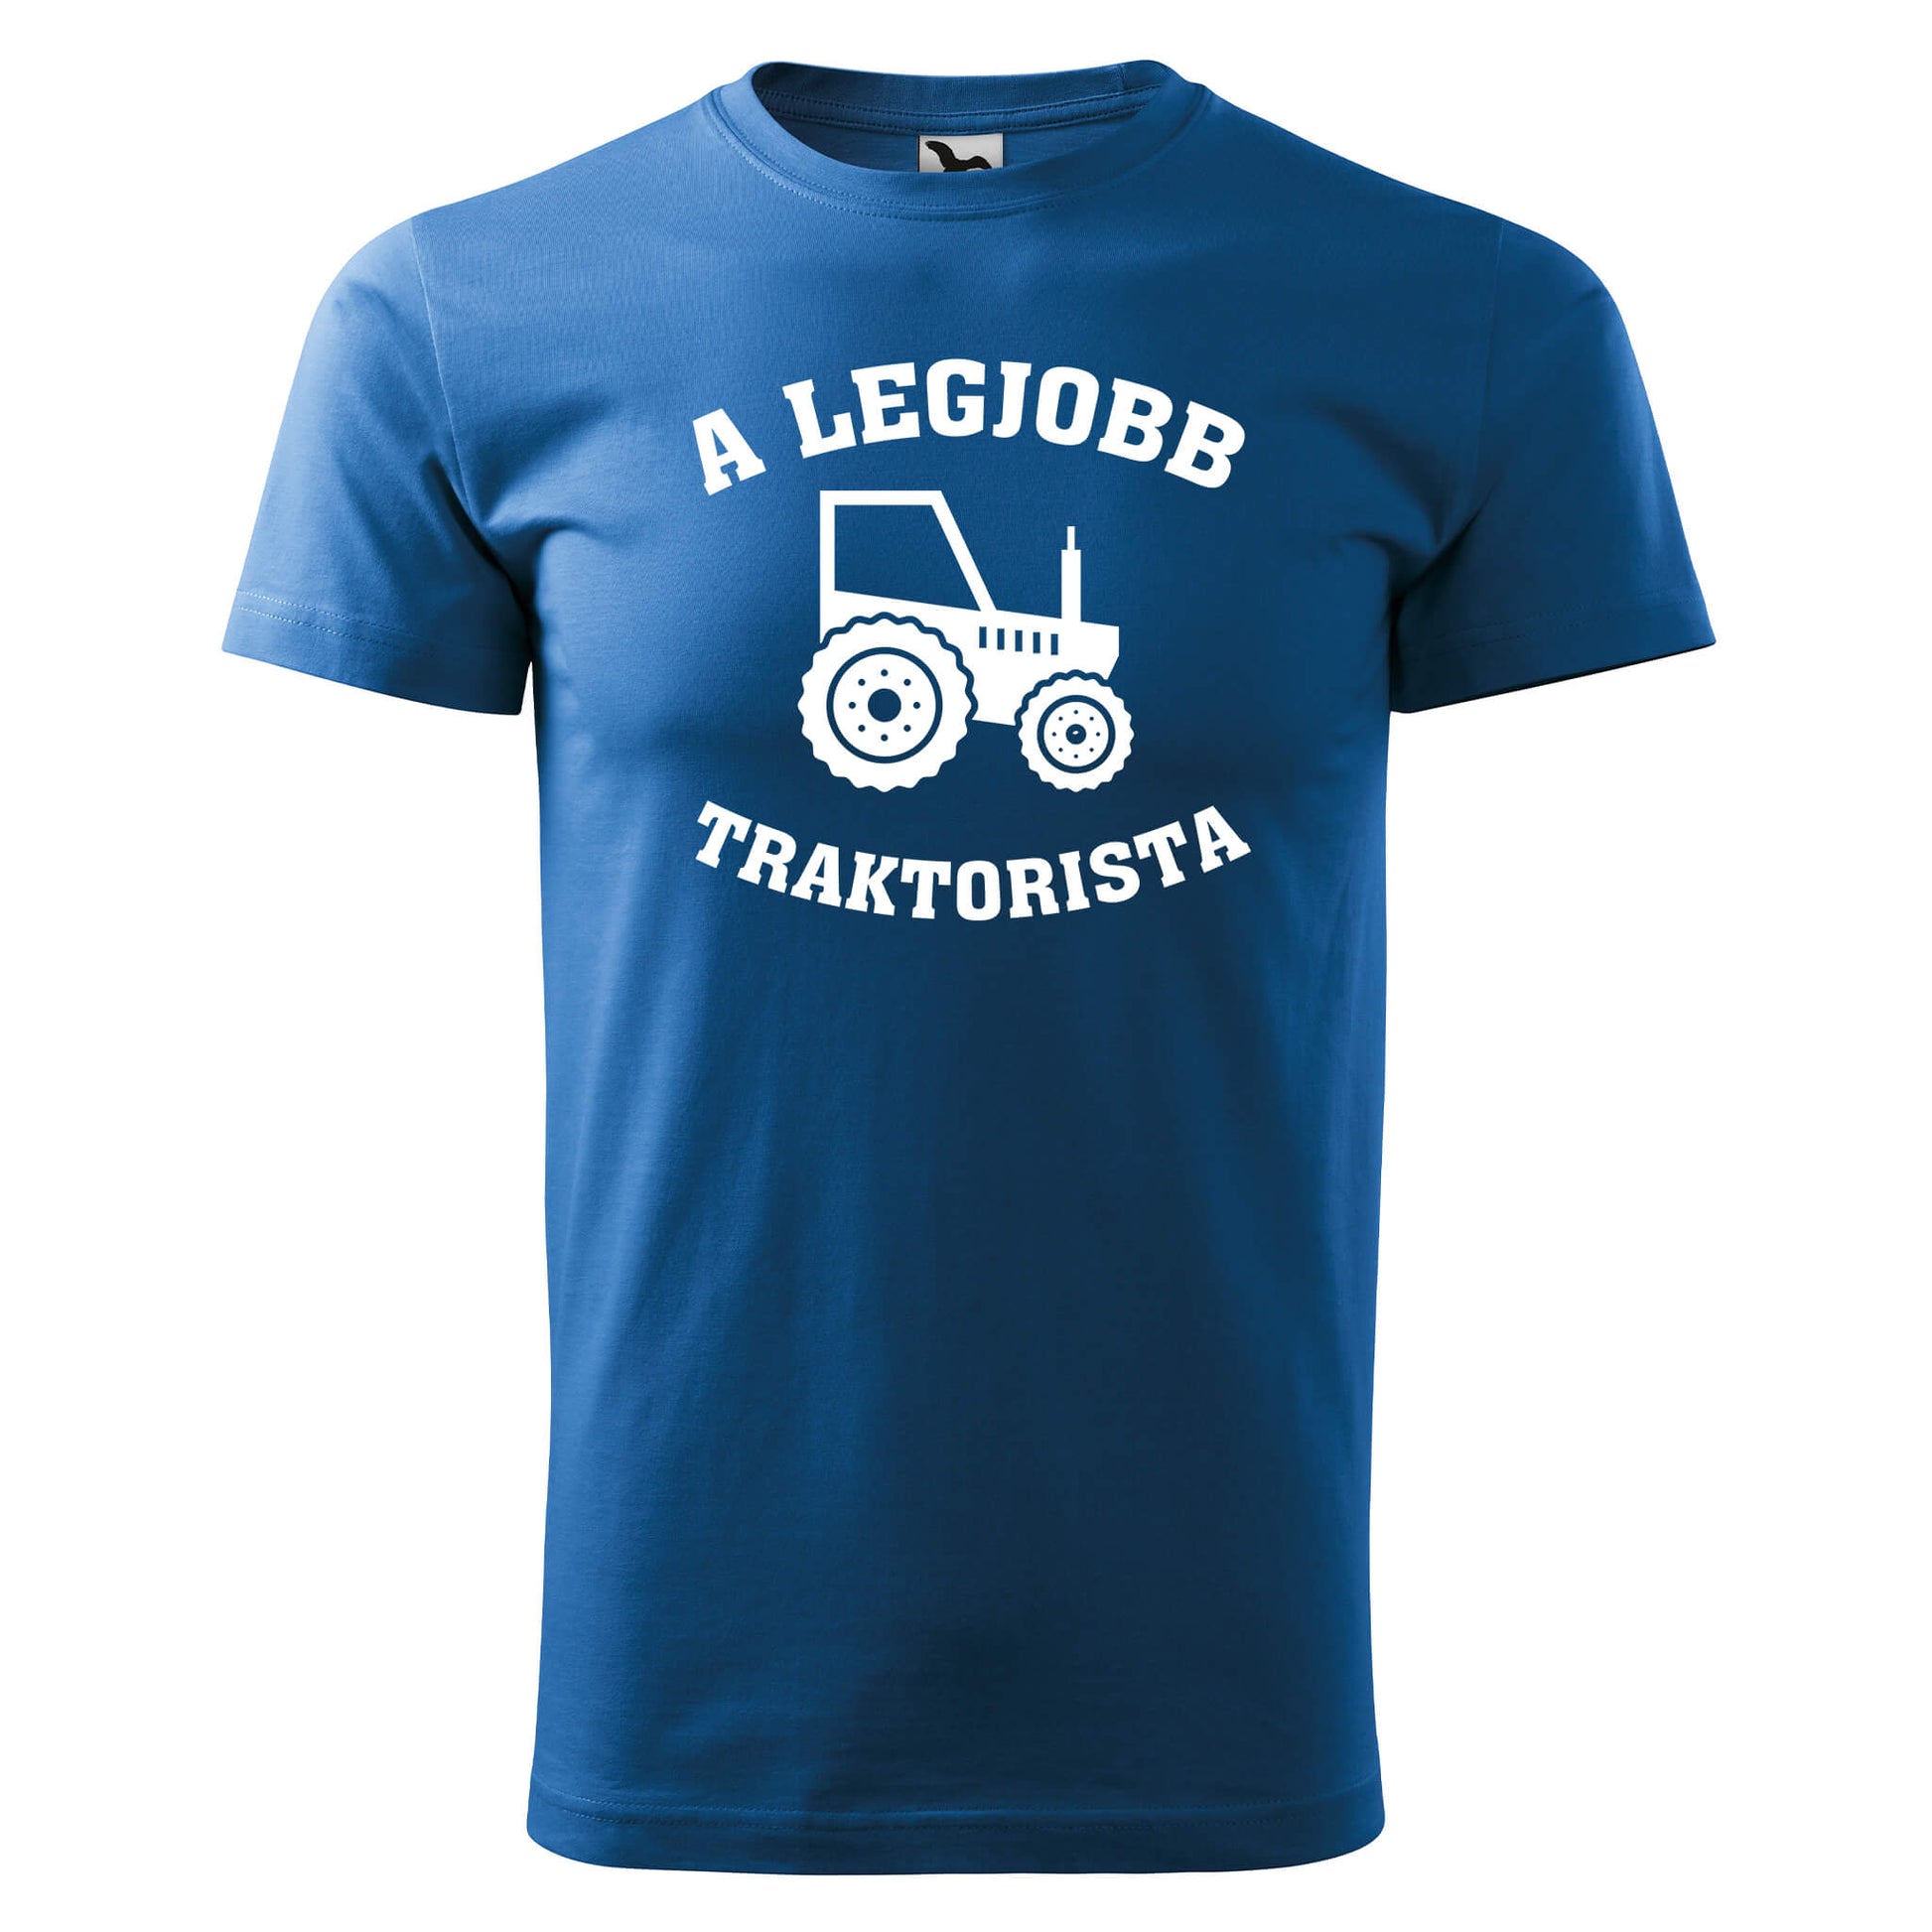 T-shirt - A legjobb traktorista - rvdesignprint